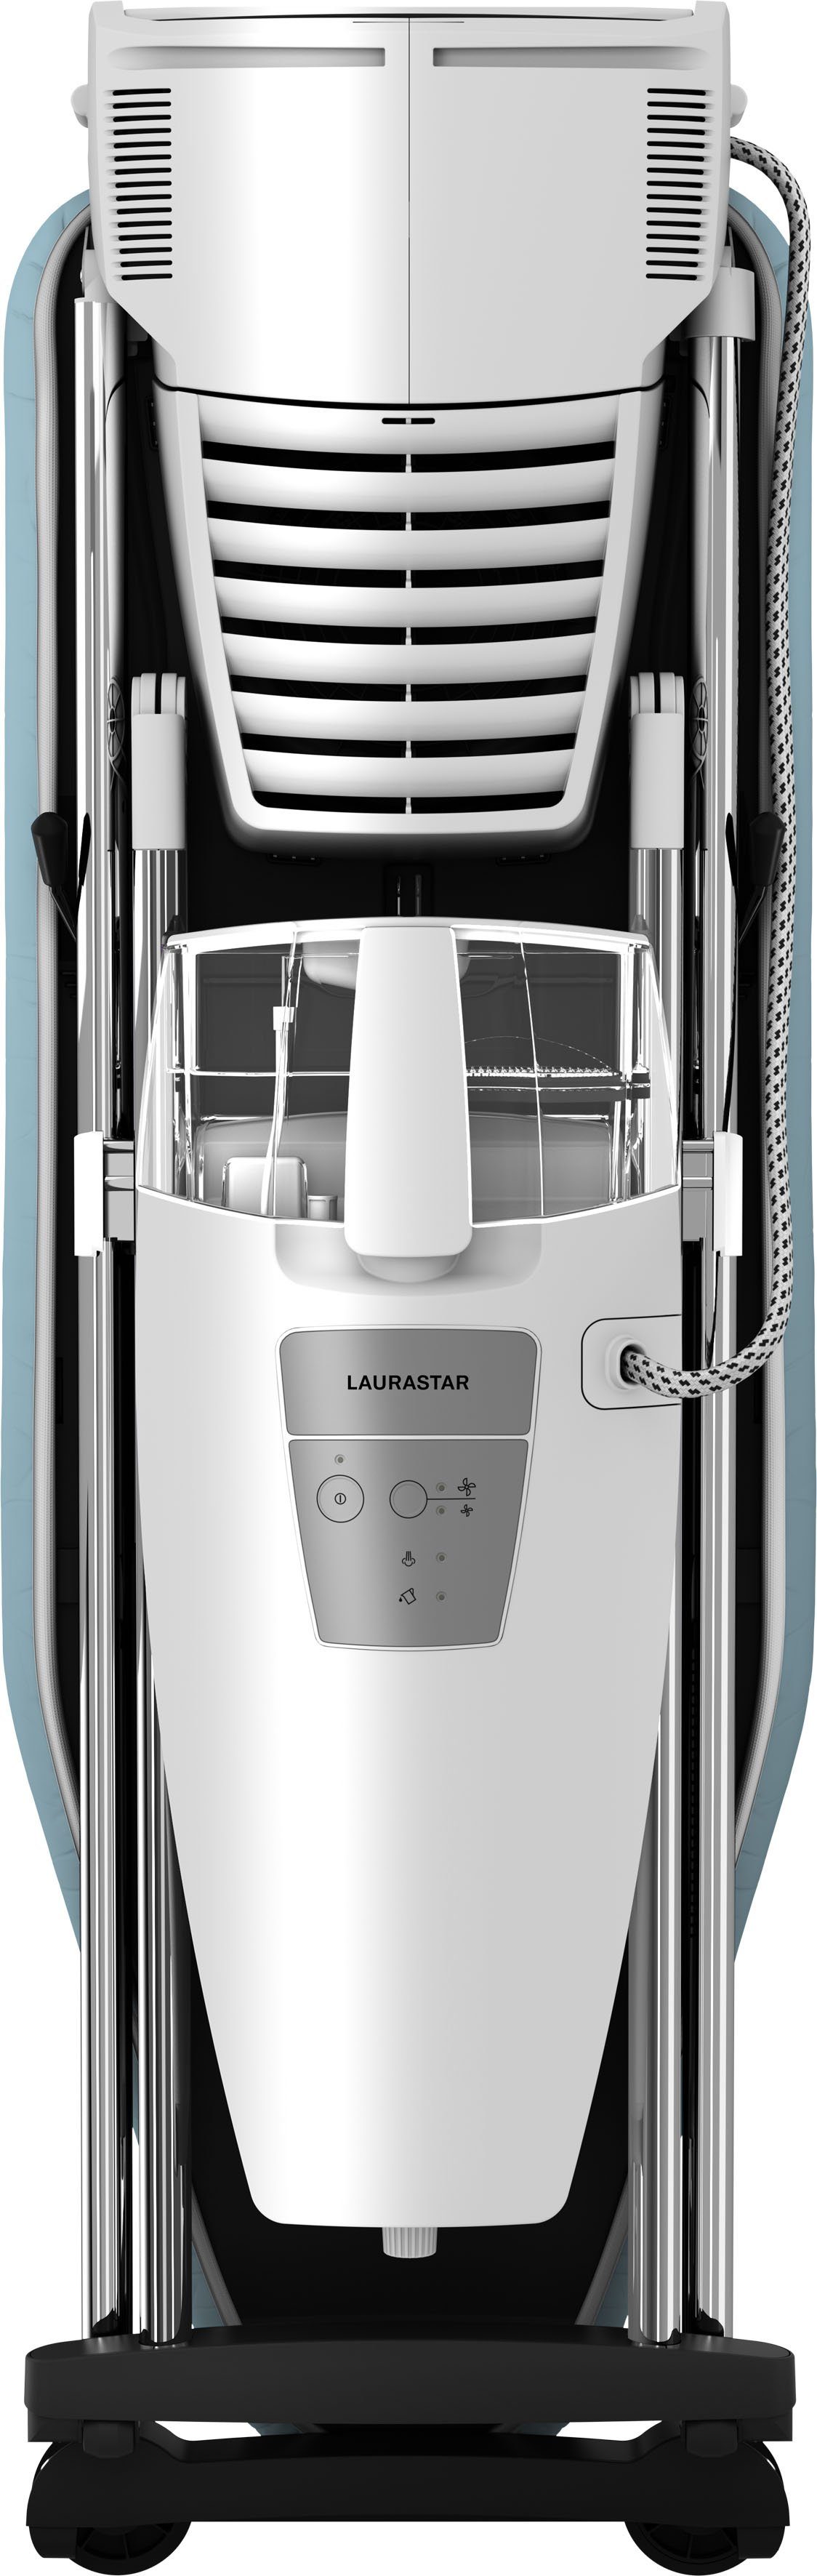 W Xtremecover, LAURASTAR S Bügelsystem + Pure 2200